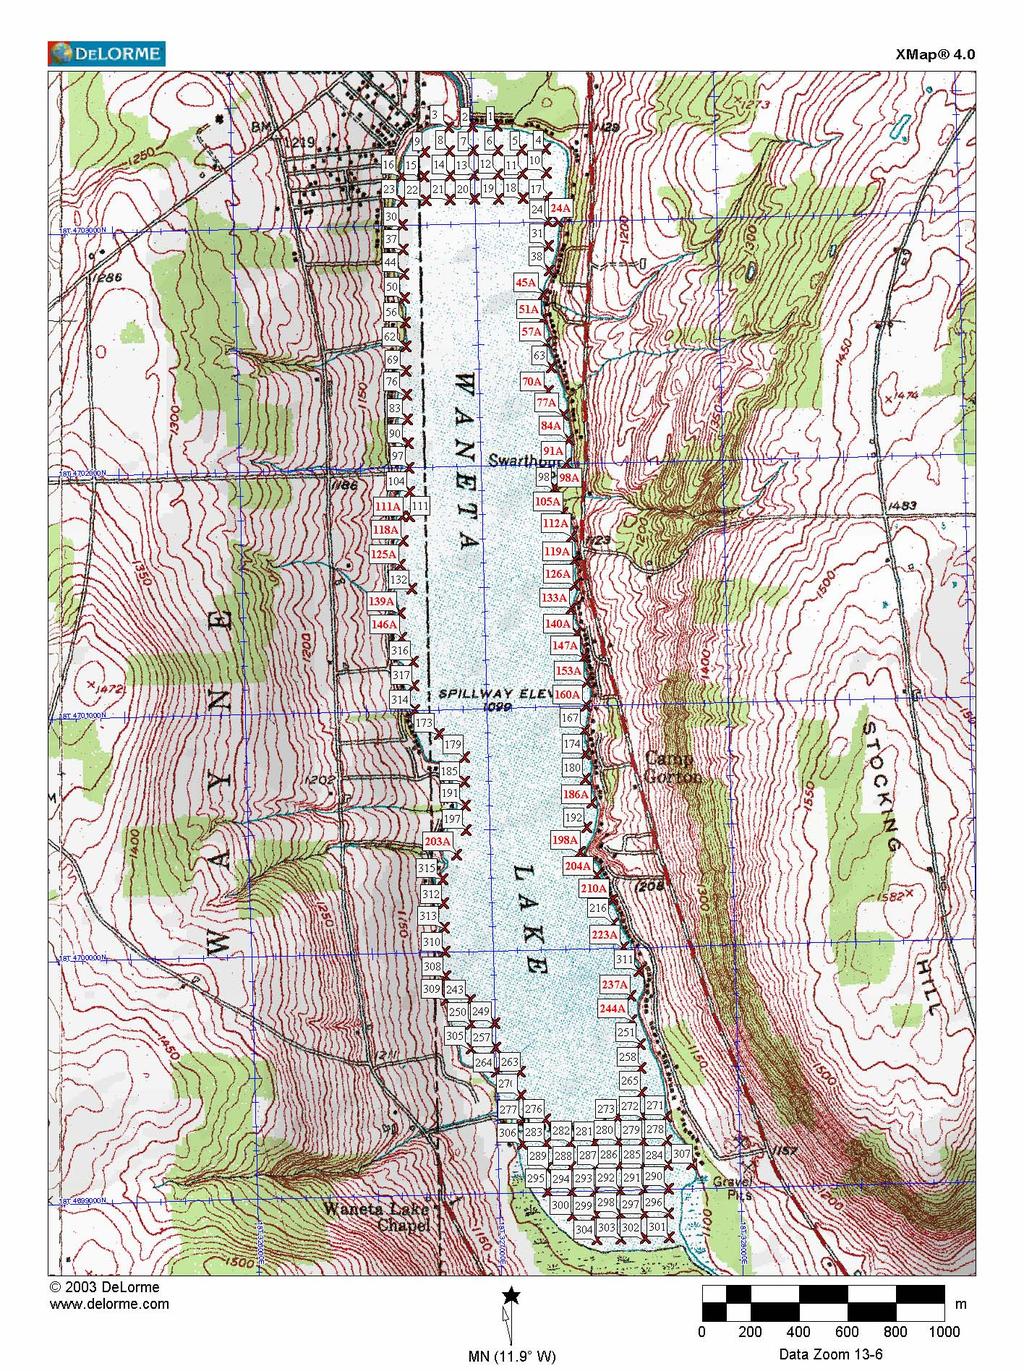 Figure 1. Locations in Waneta Lake where rake toss measurements were taken from August 27 - September 15, 2008.